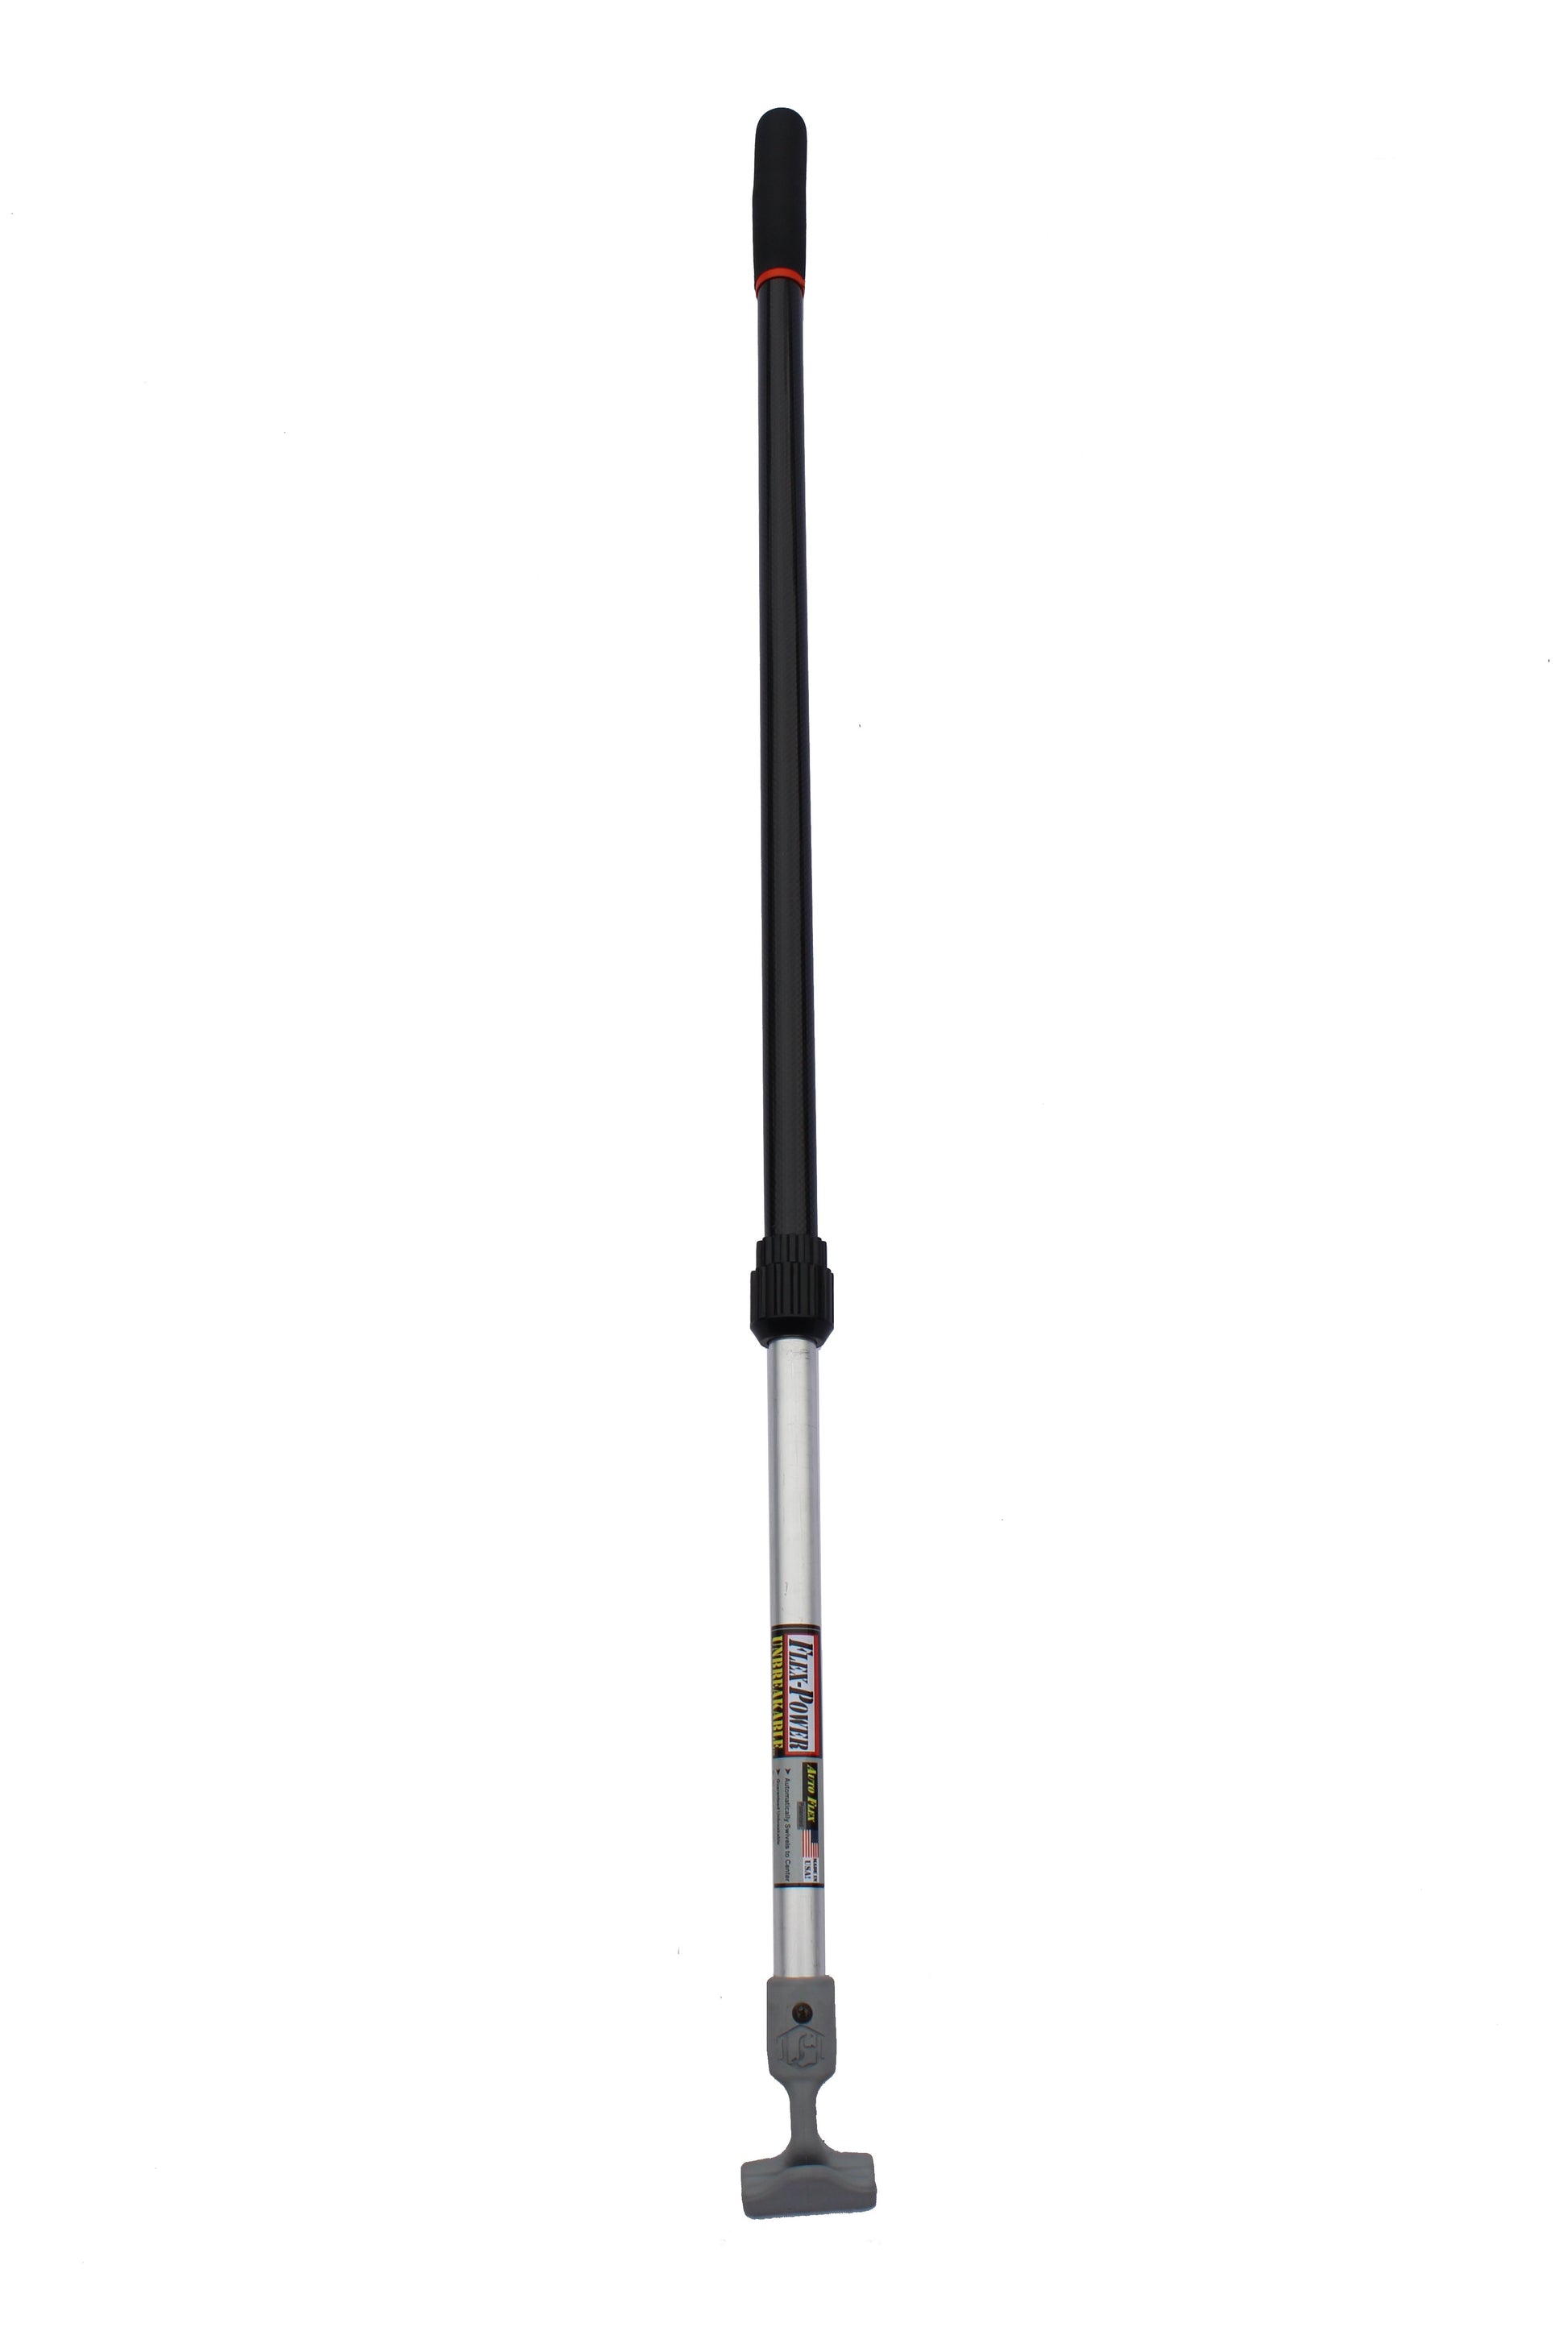 TG8 Carbon Fiber/Aero-Aluminum Telescopic Handle for Dust Mops (6 Pack) - FlexSweep